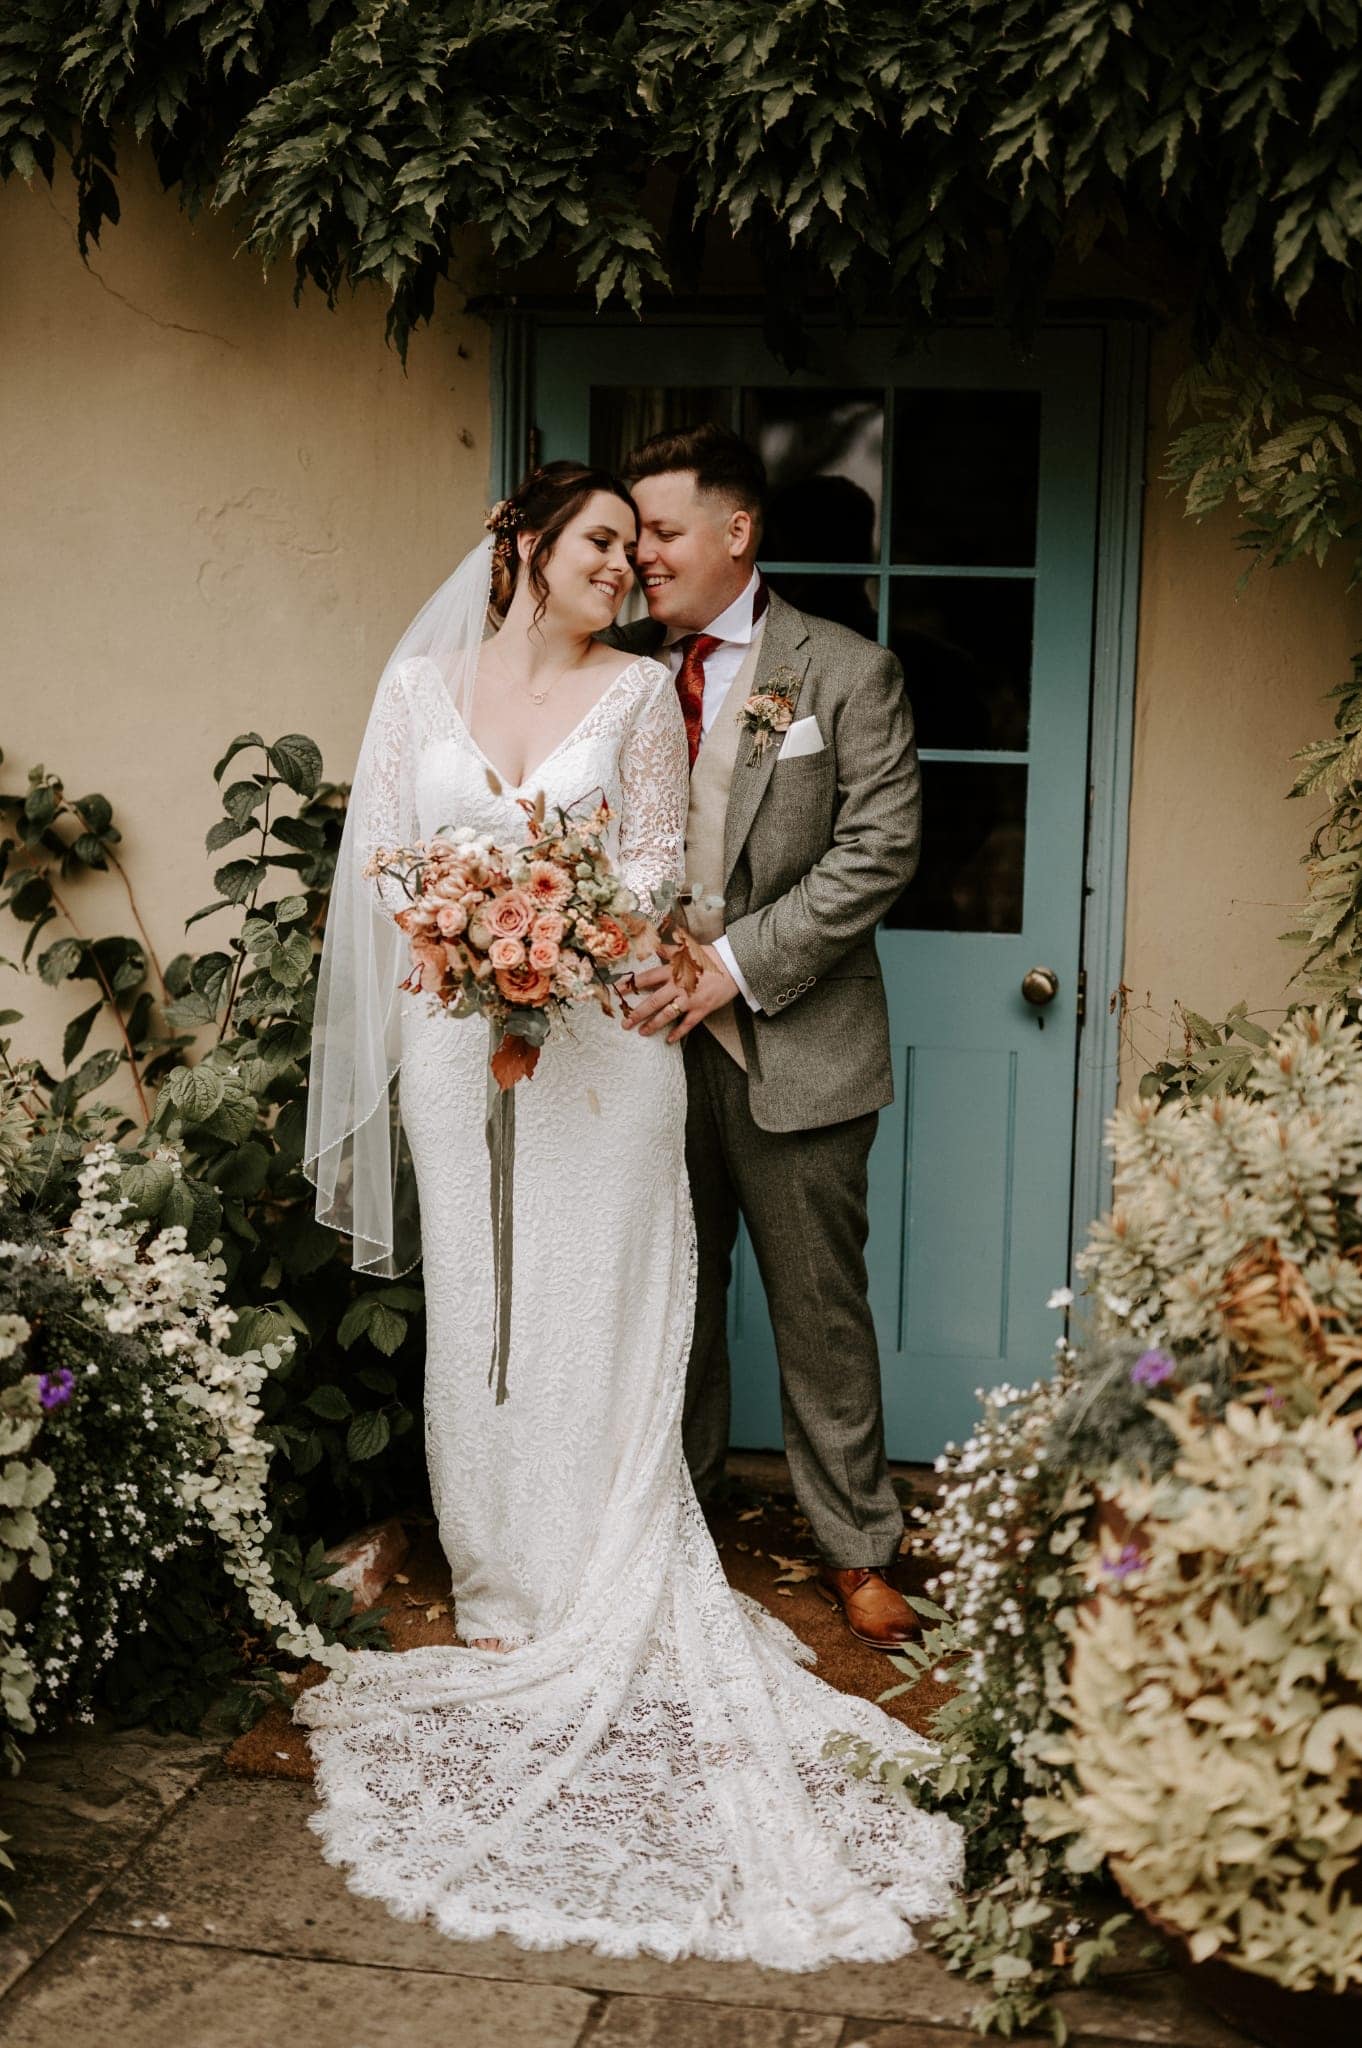 Bride in wedding gown and groom in tweed suit kiss in front of blue farmhouse door